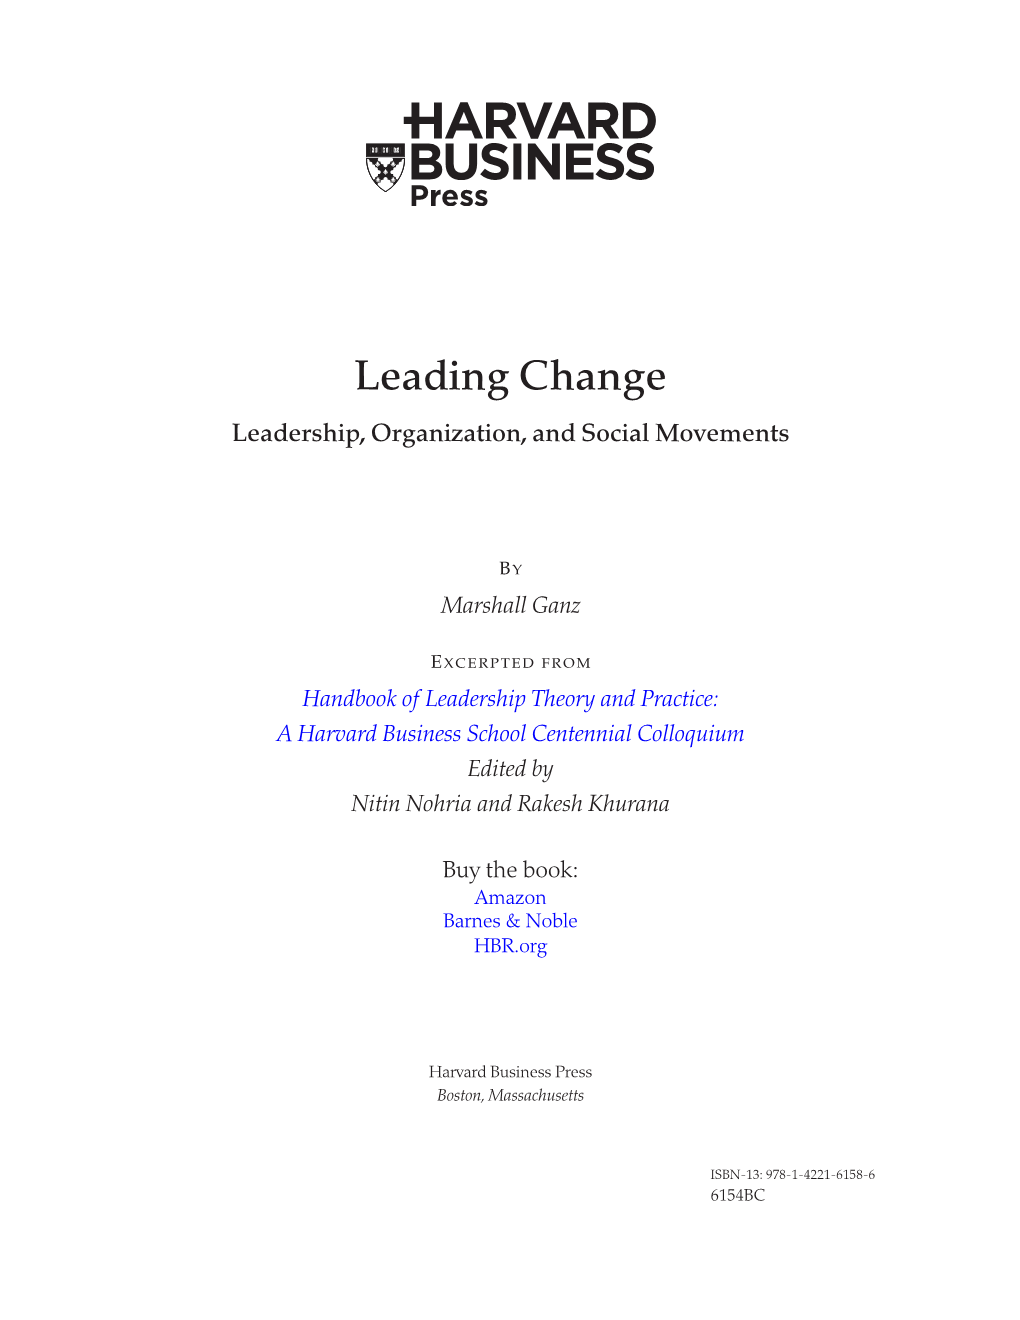 Leading Change: Leadership, Organization and Social Movements